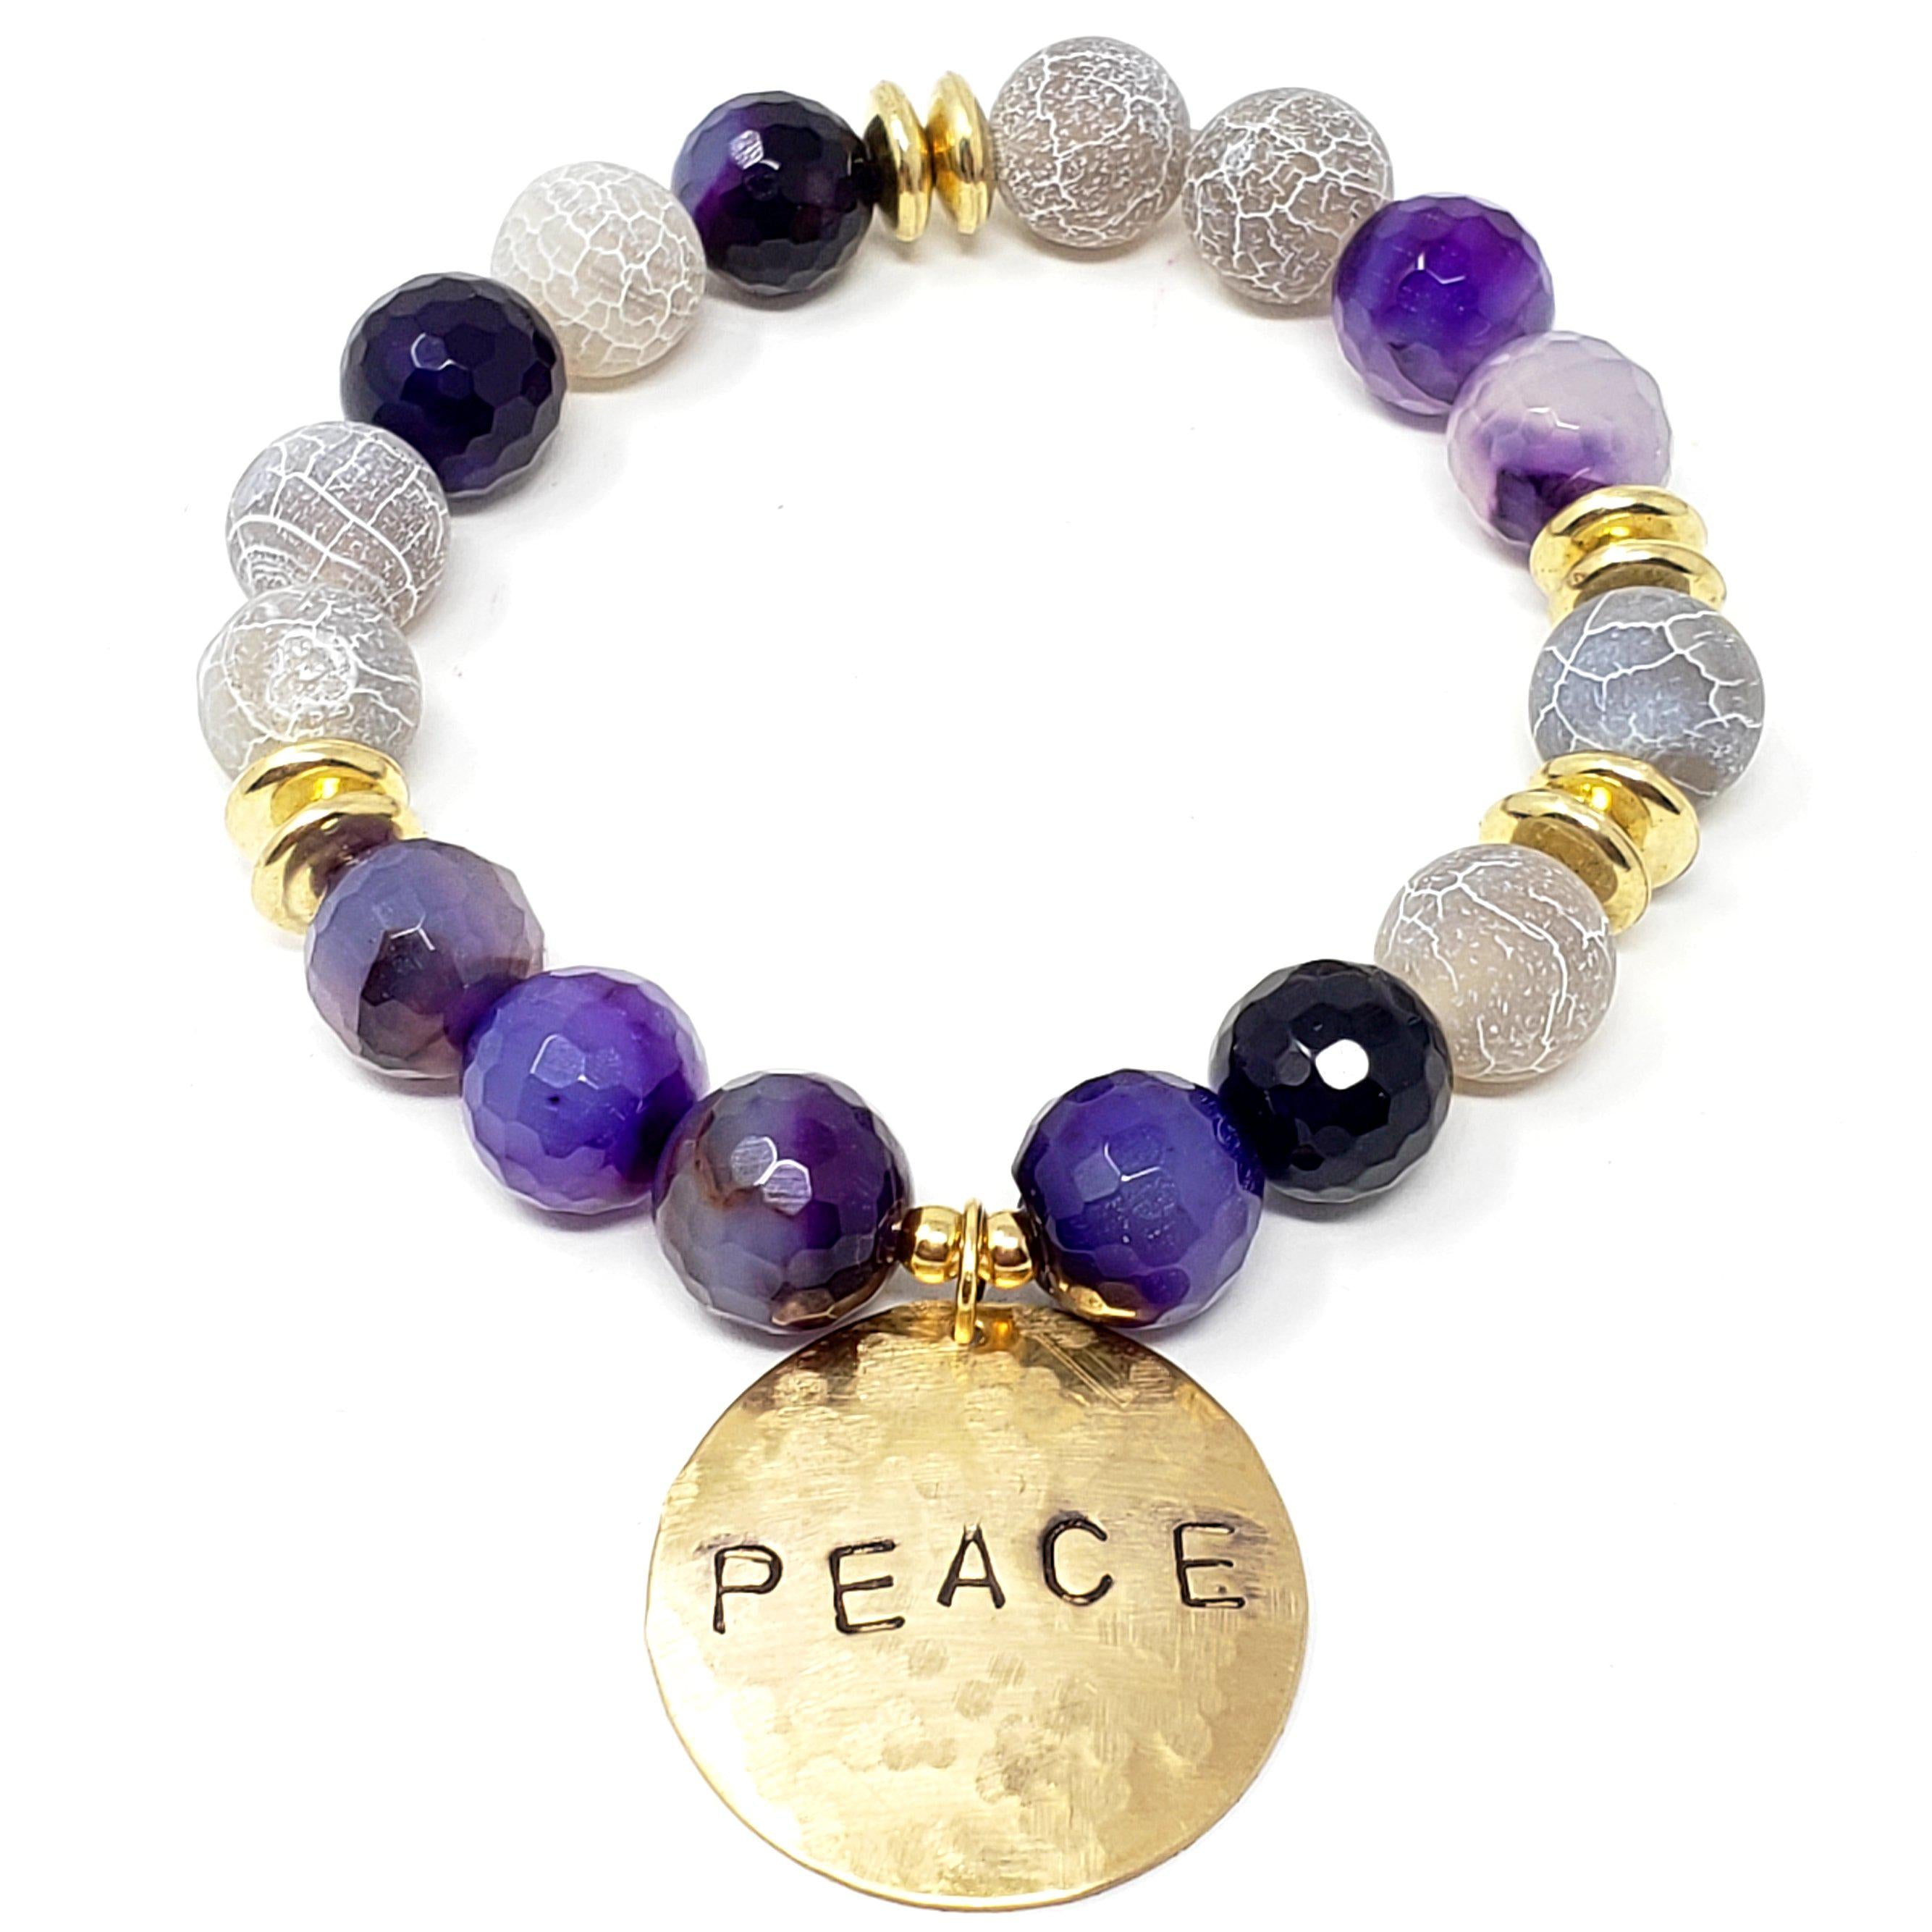 "I Choose Peace" Affirmation Bracelets